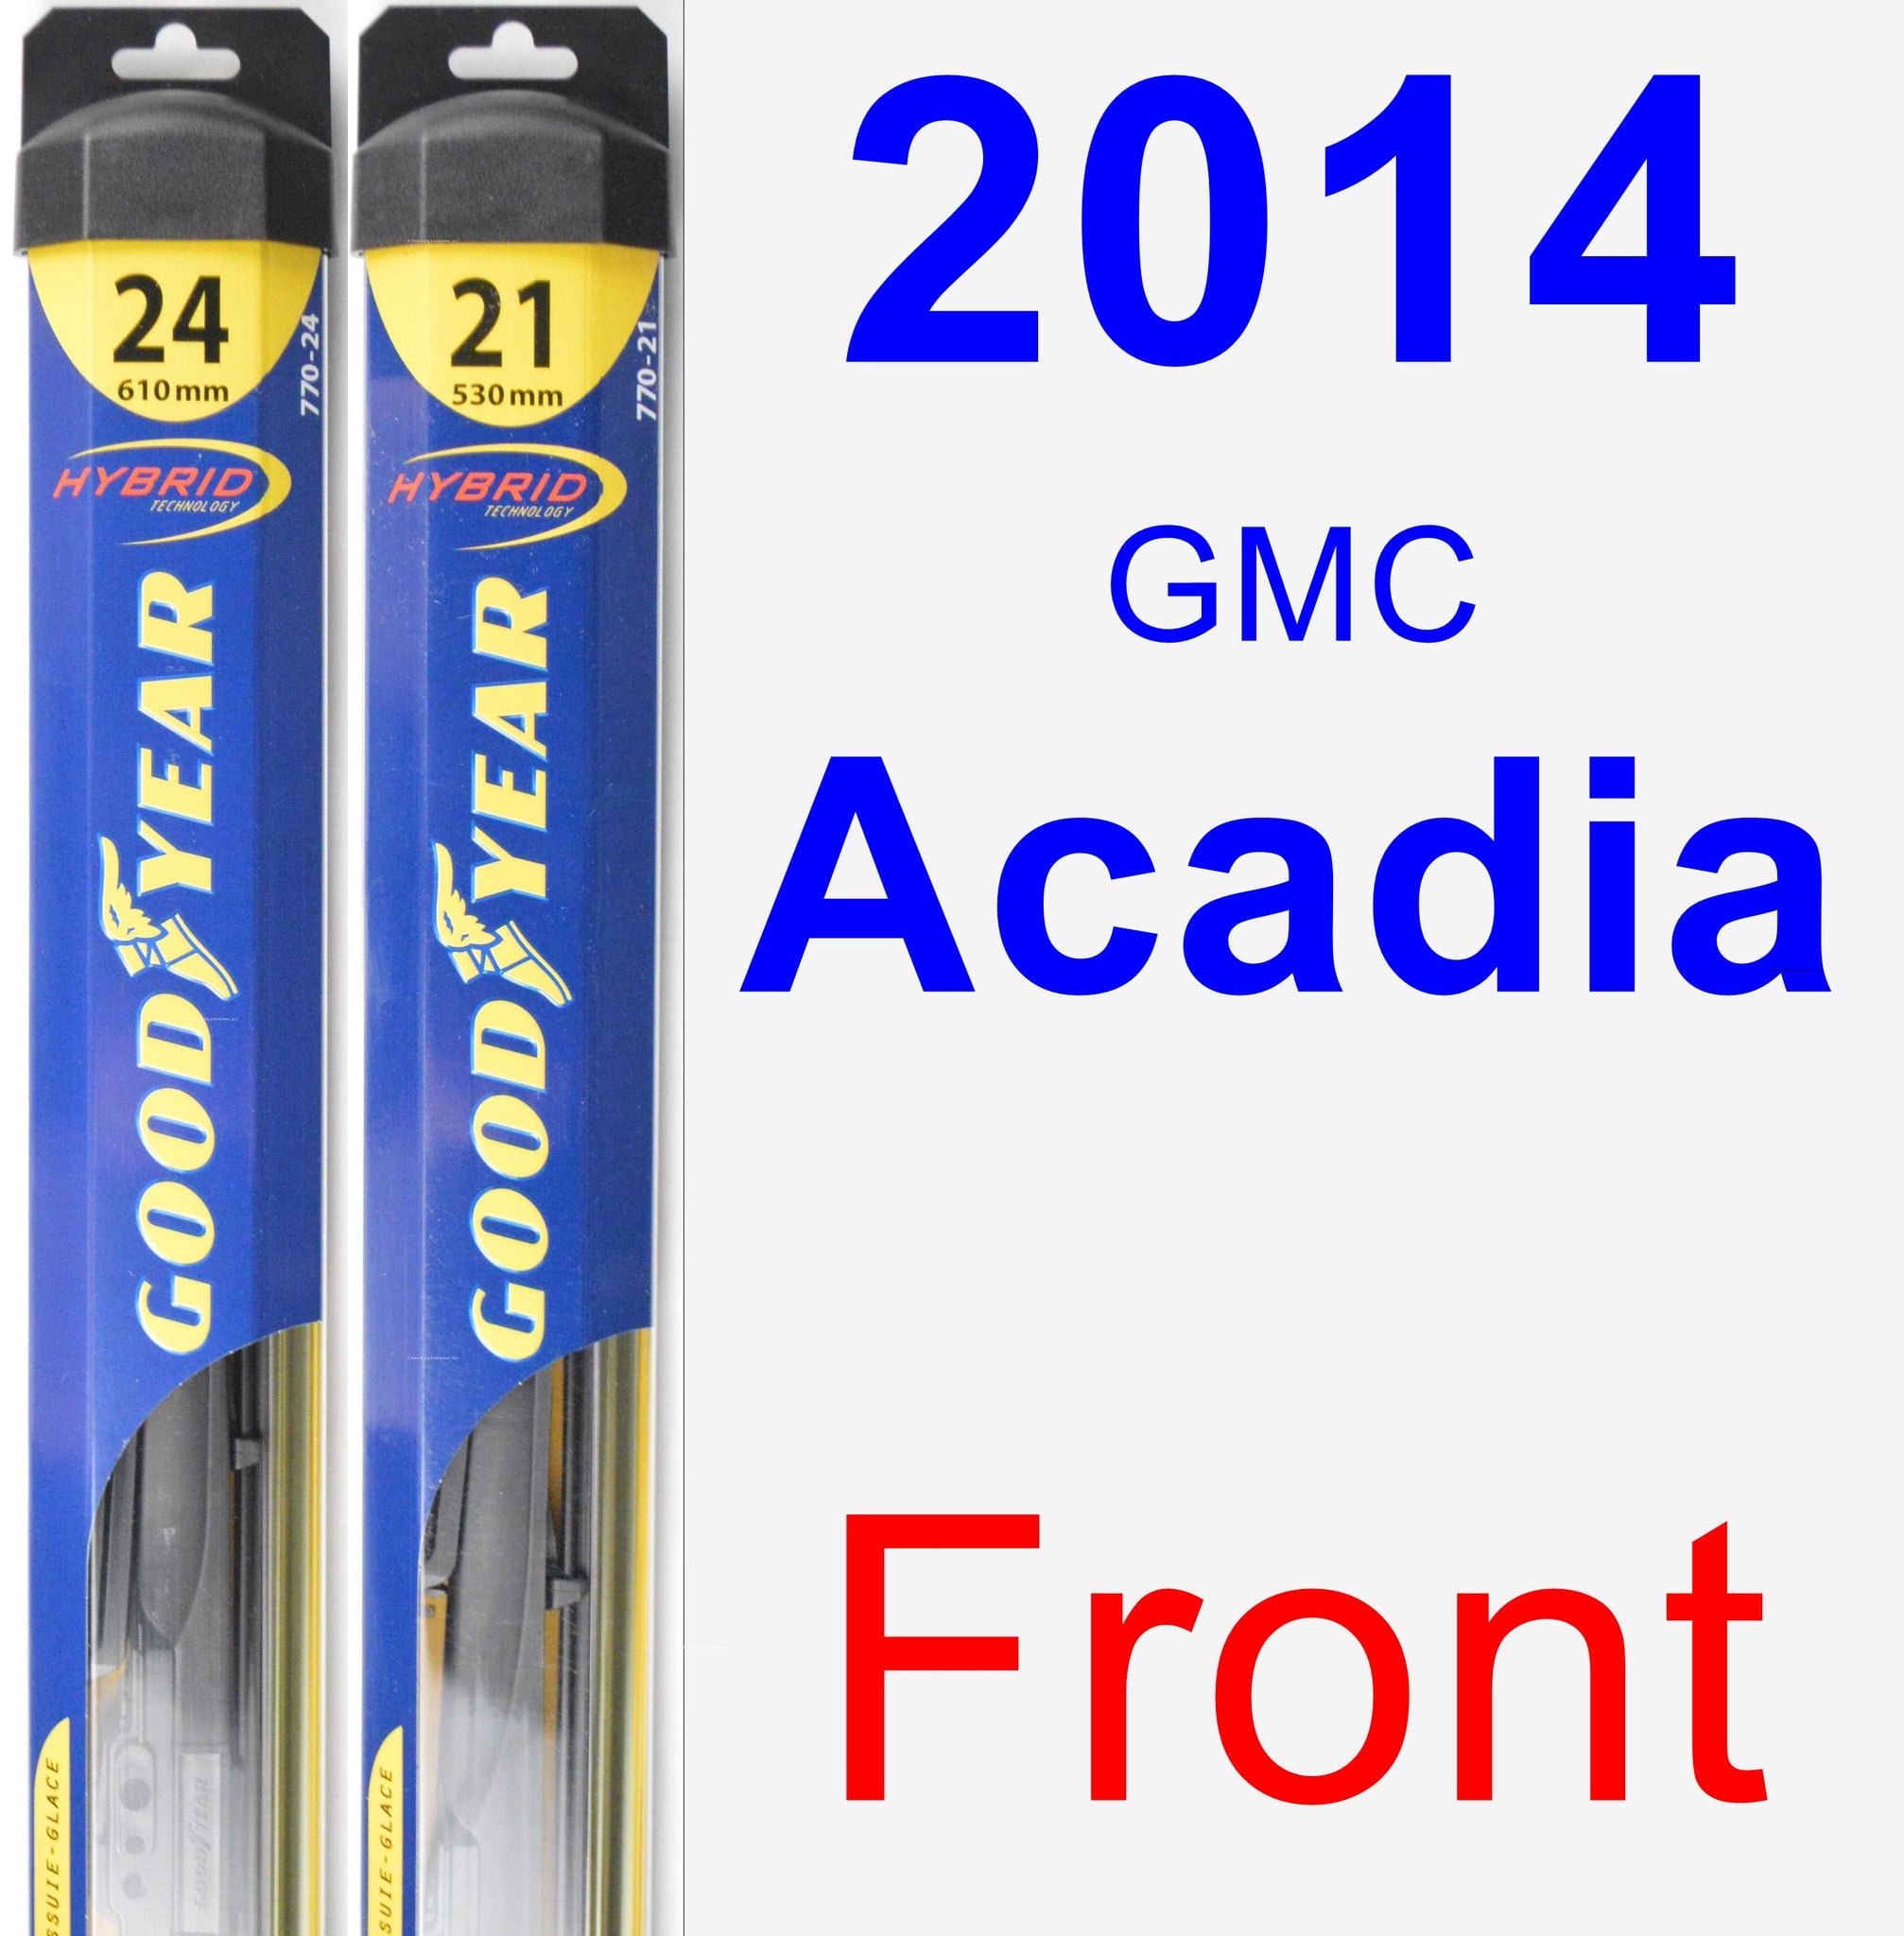 2014 GMC Acadia Wiper Blade Set/Kit (Front) (2 Blades) - Hybrid - Walmart.com - Walmart.com 2014 Gmc Acadia Rear Wiper Blade Size